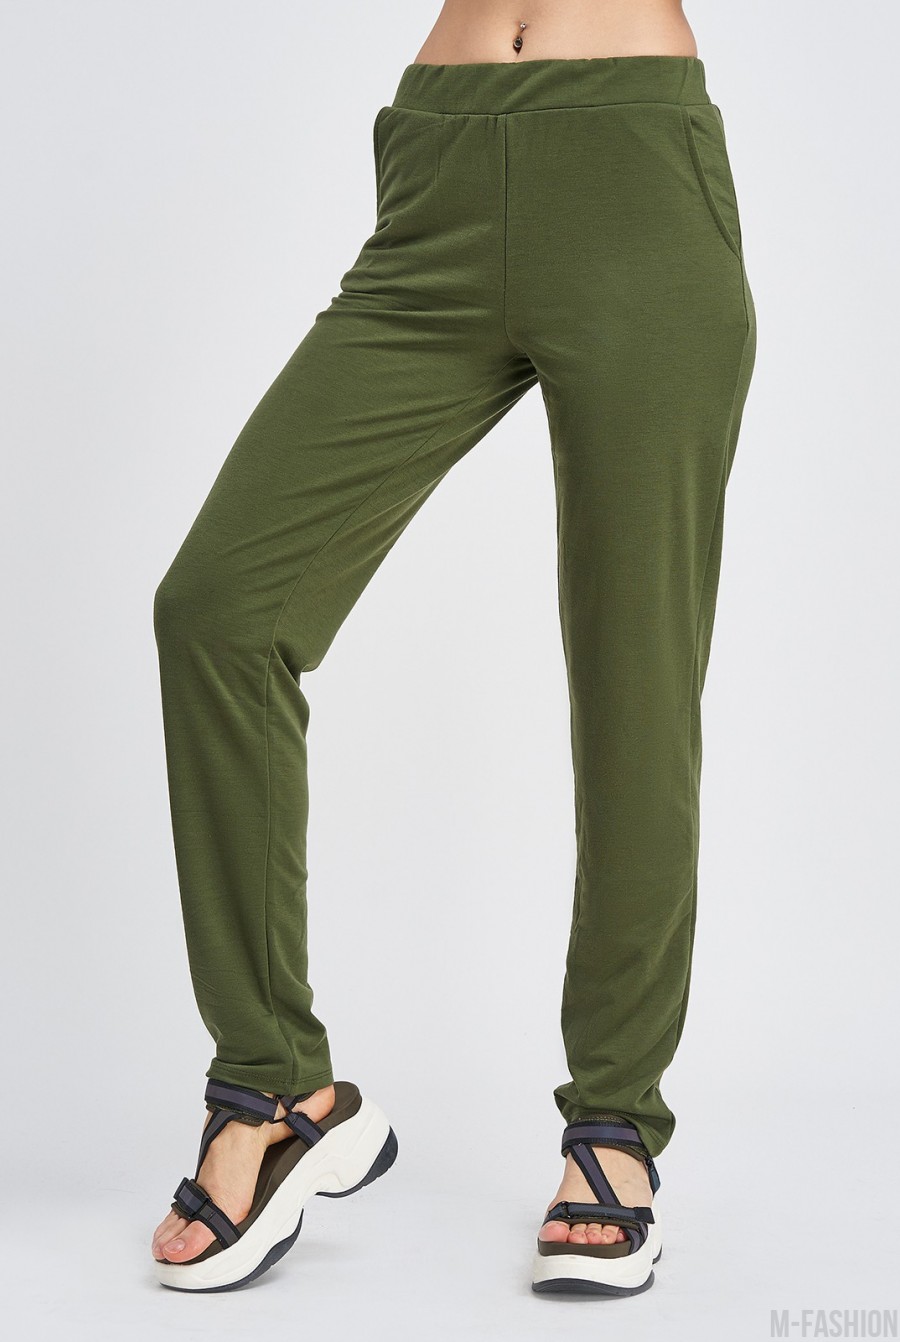 Спортивные штаны из трикотажа цвета хаки - Фото 1